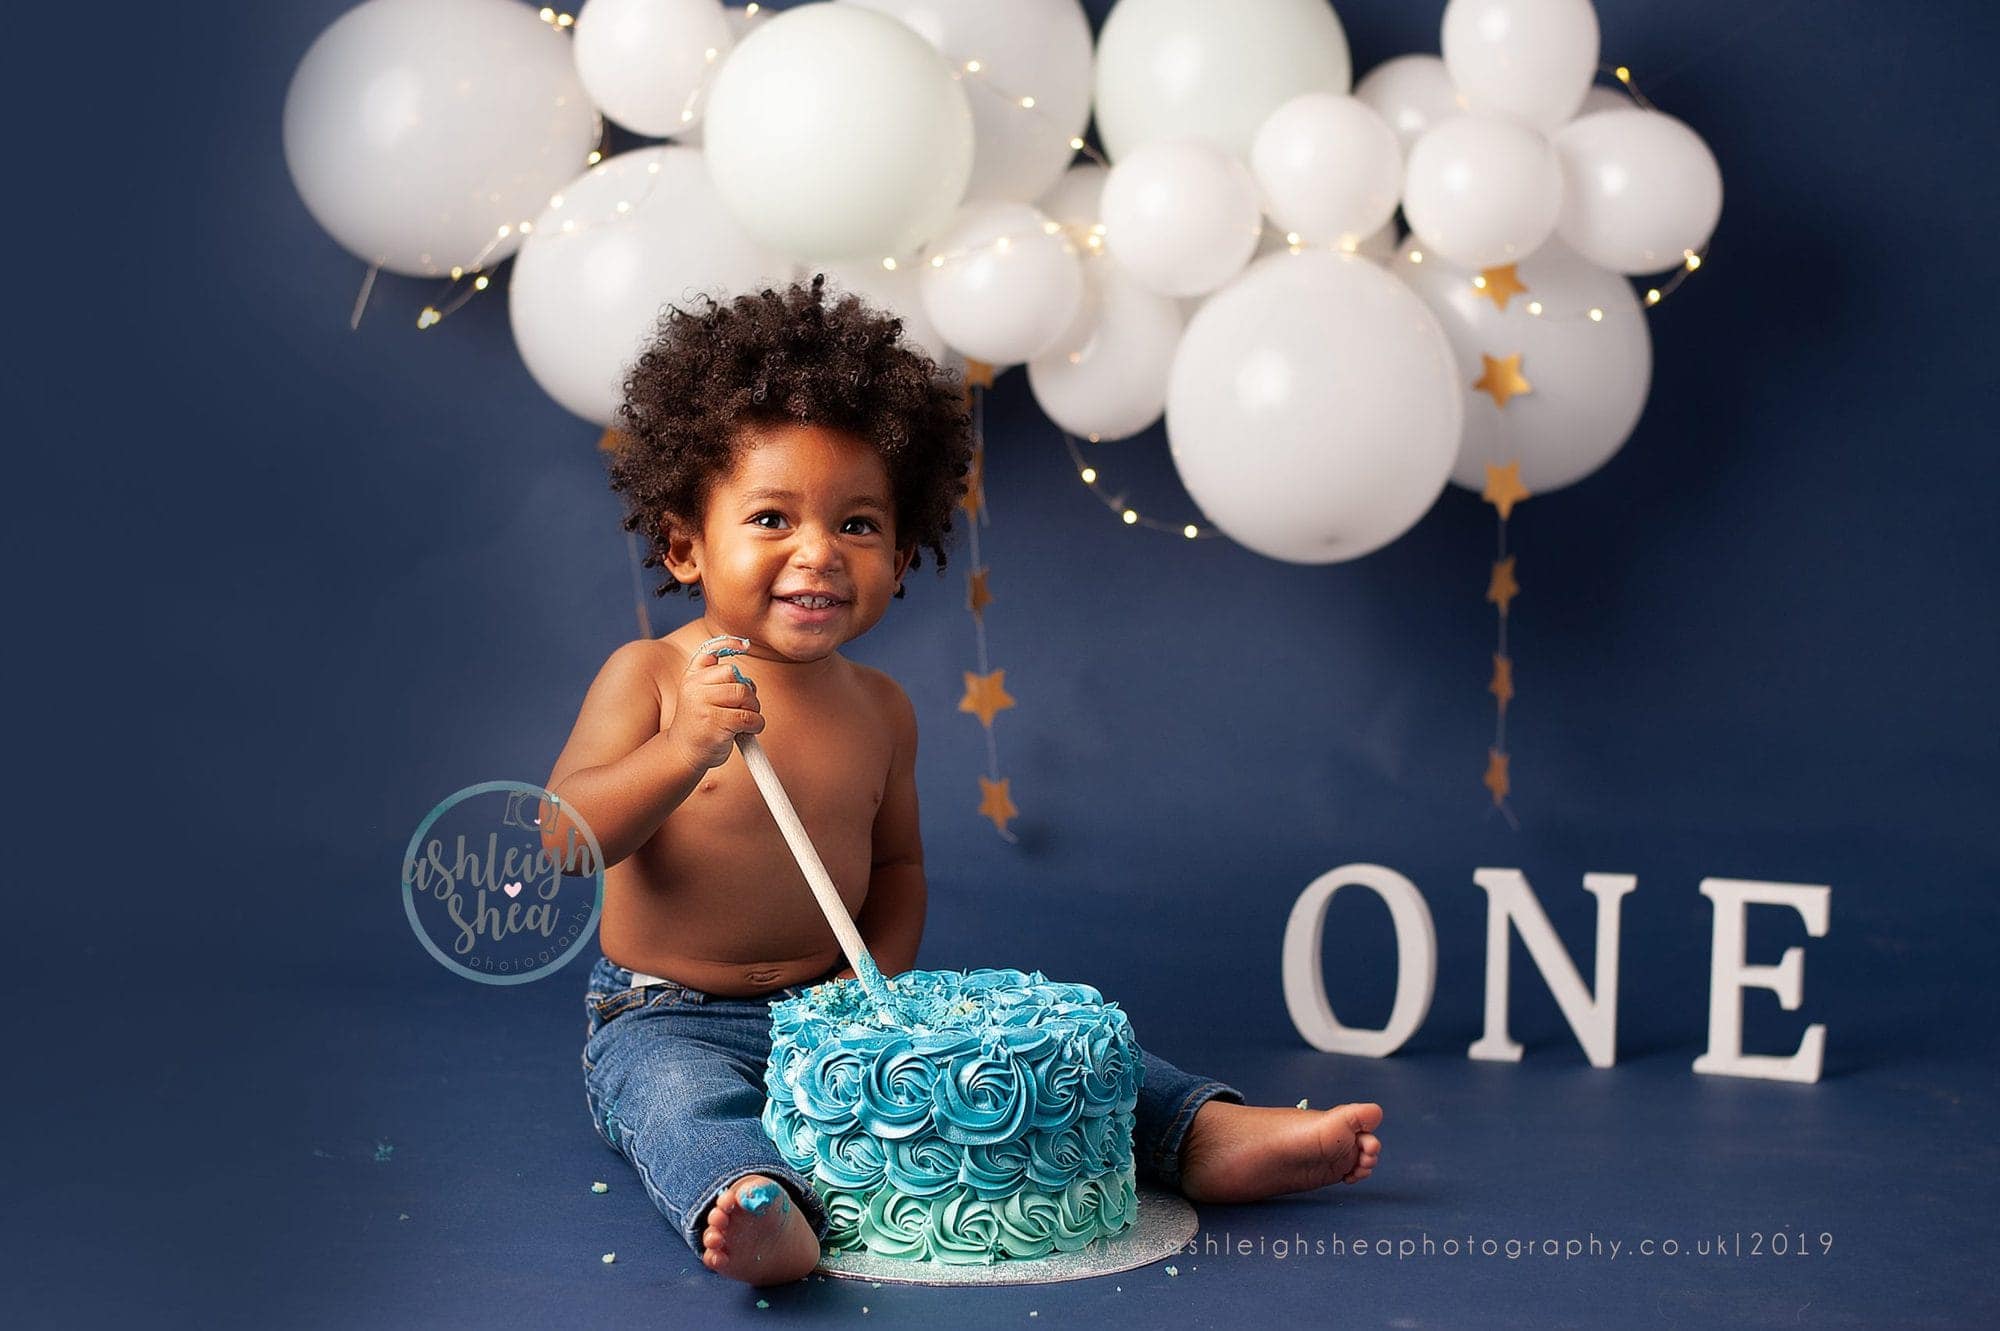 Stars, Cake Smash, First Birthday, White Balloon Garland, Boys First Birthday, Ashleigh Shea Photography, London, Orpington